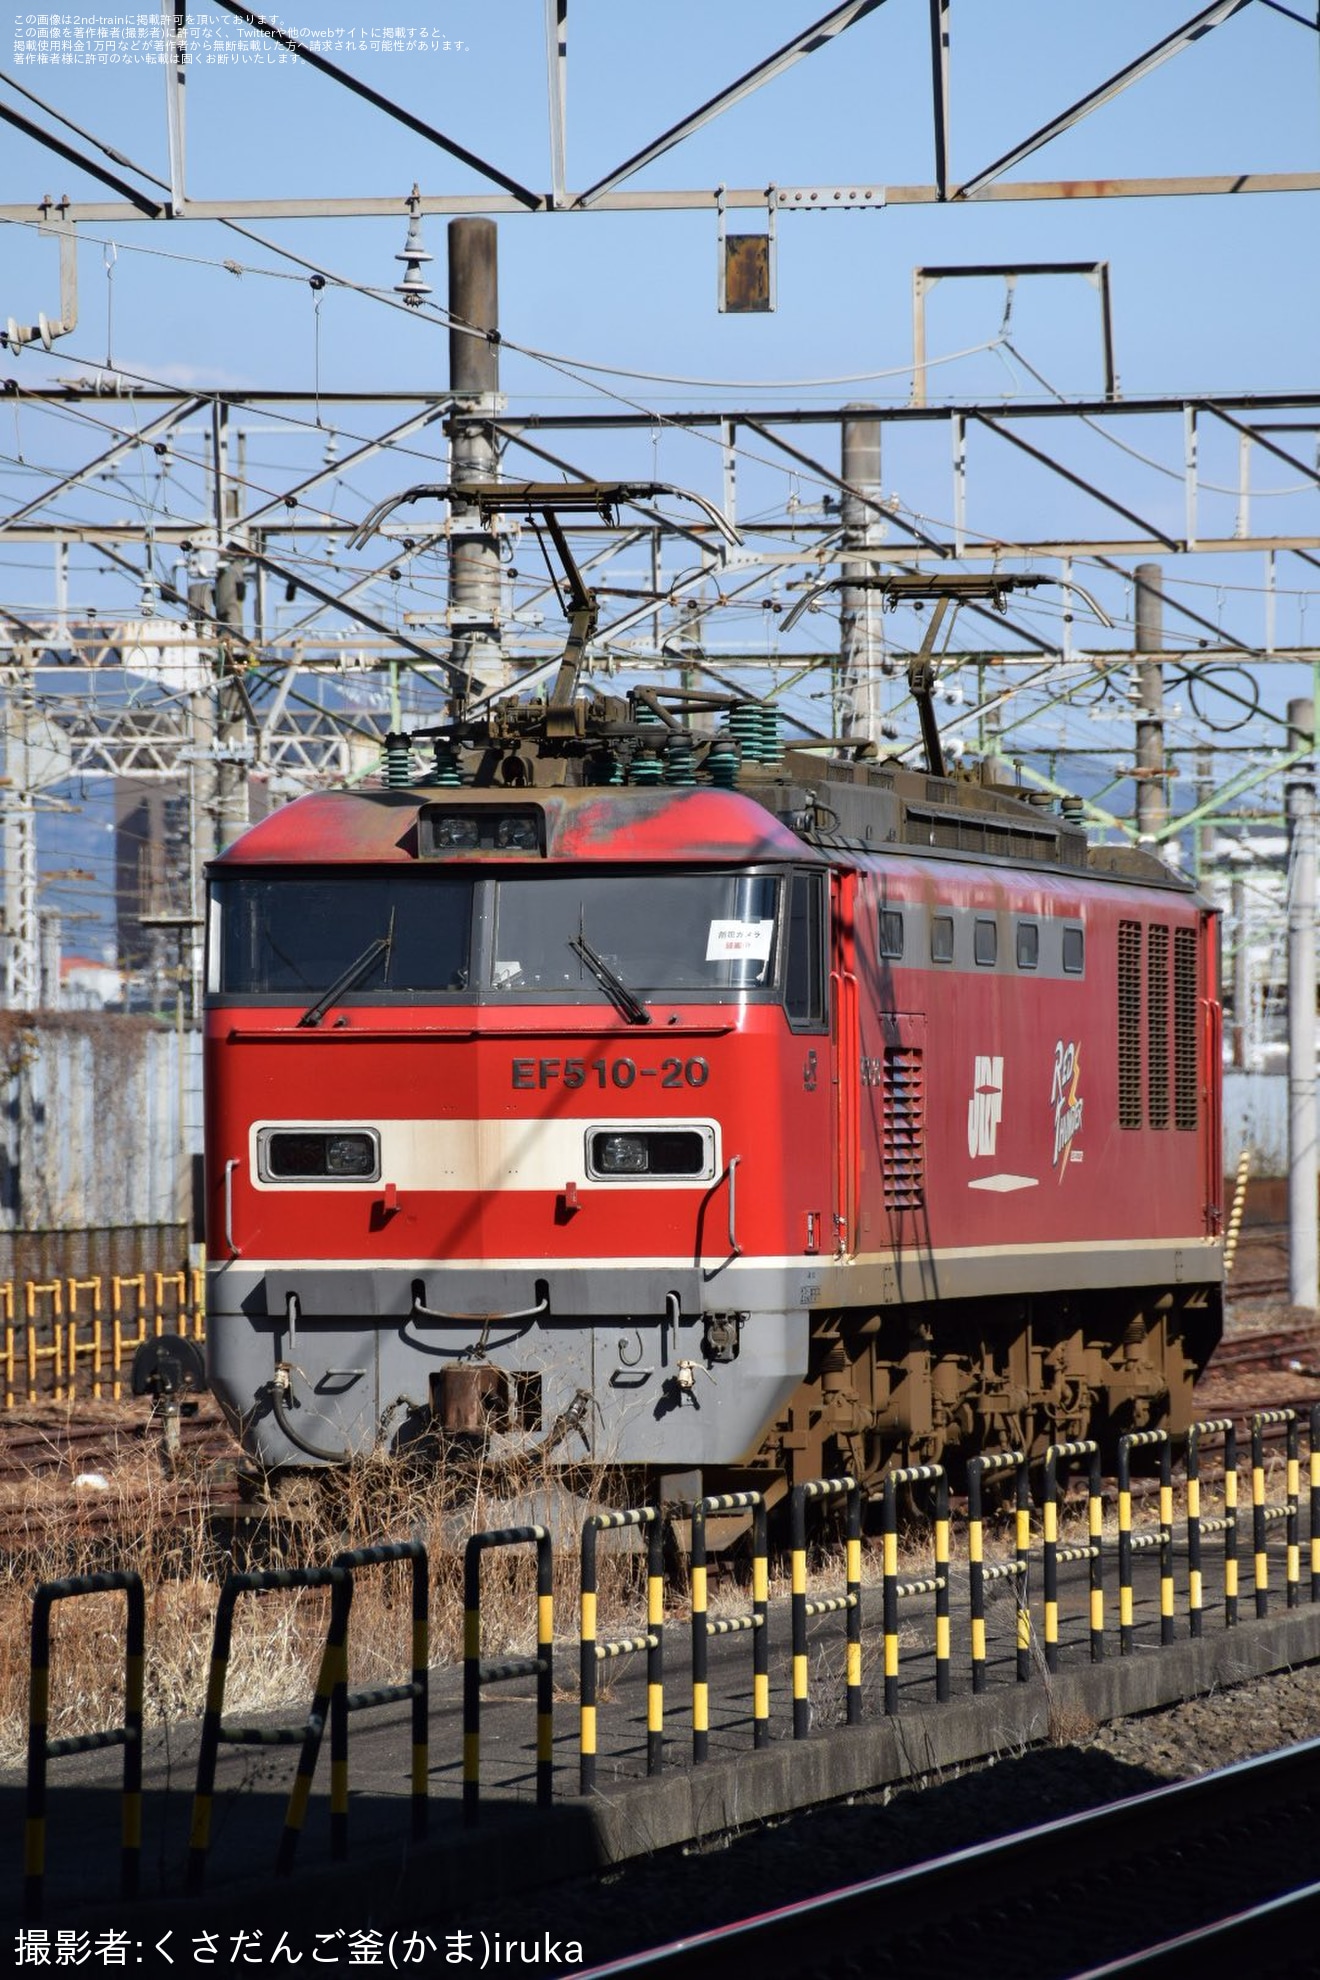 2nd-train 【JR貨】静岡貨物駅に無動力回送されたEF64-1028とEF510-20 